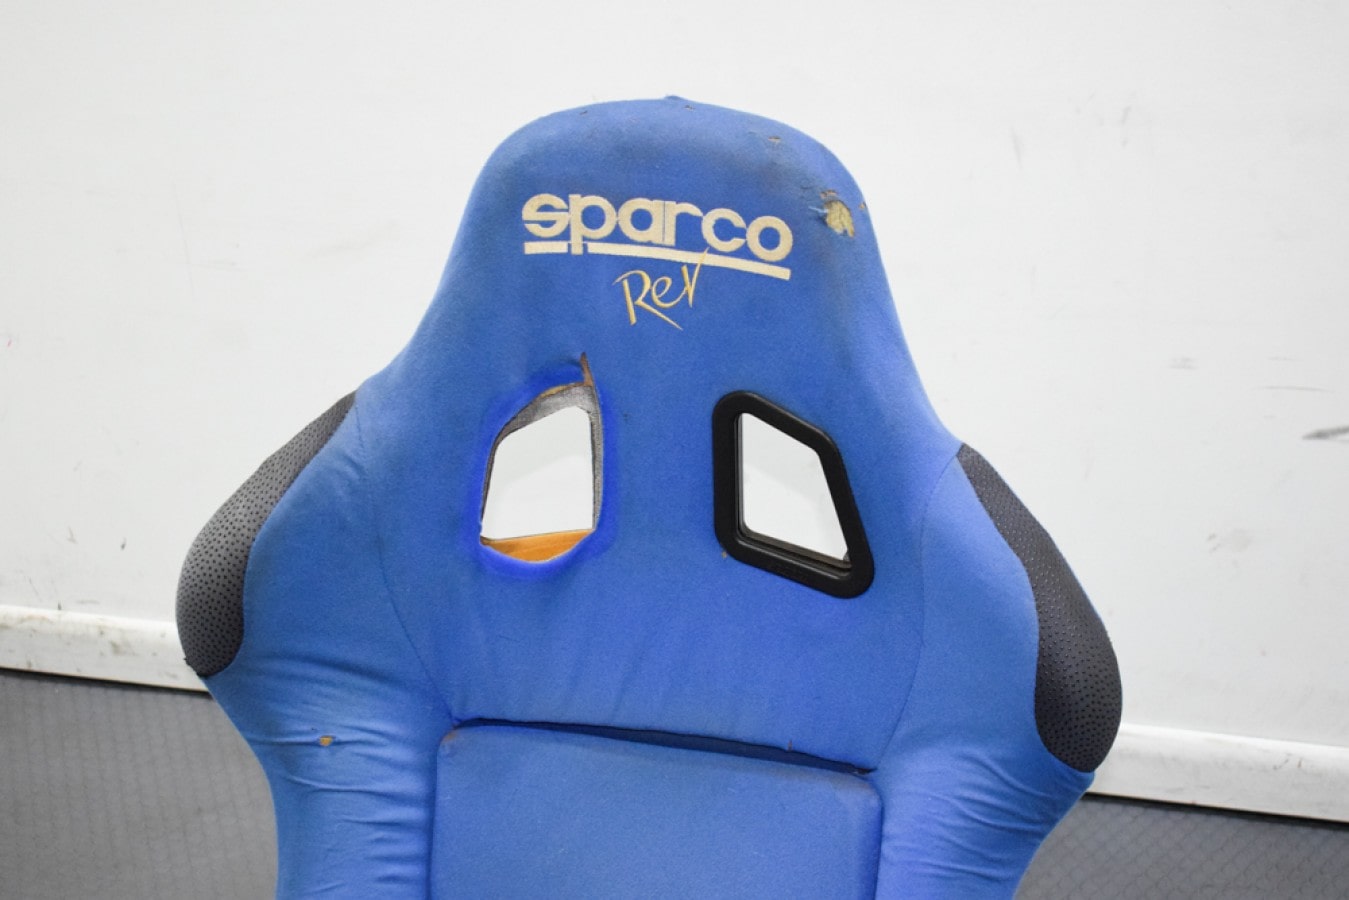 Sparco REV Seats